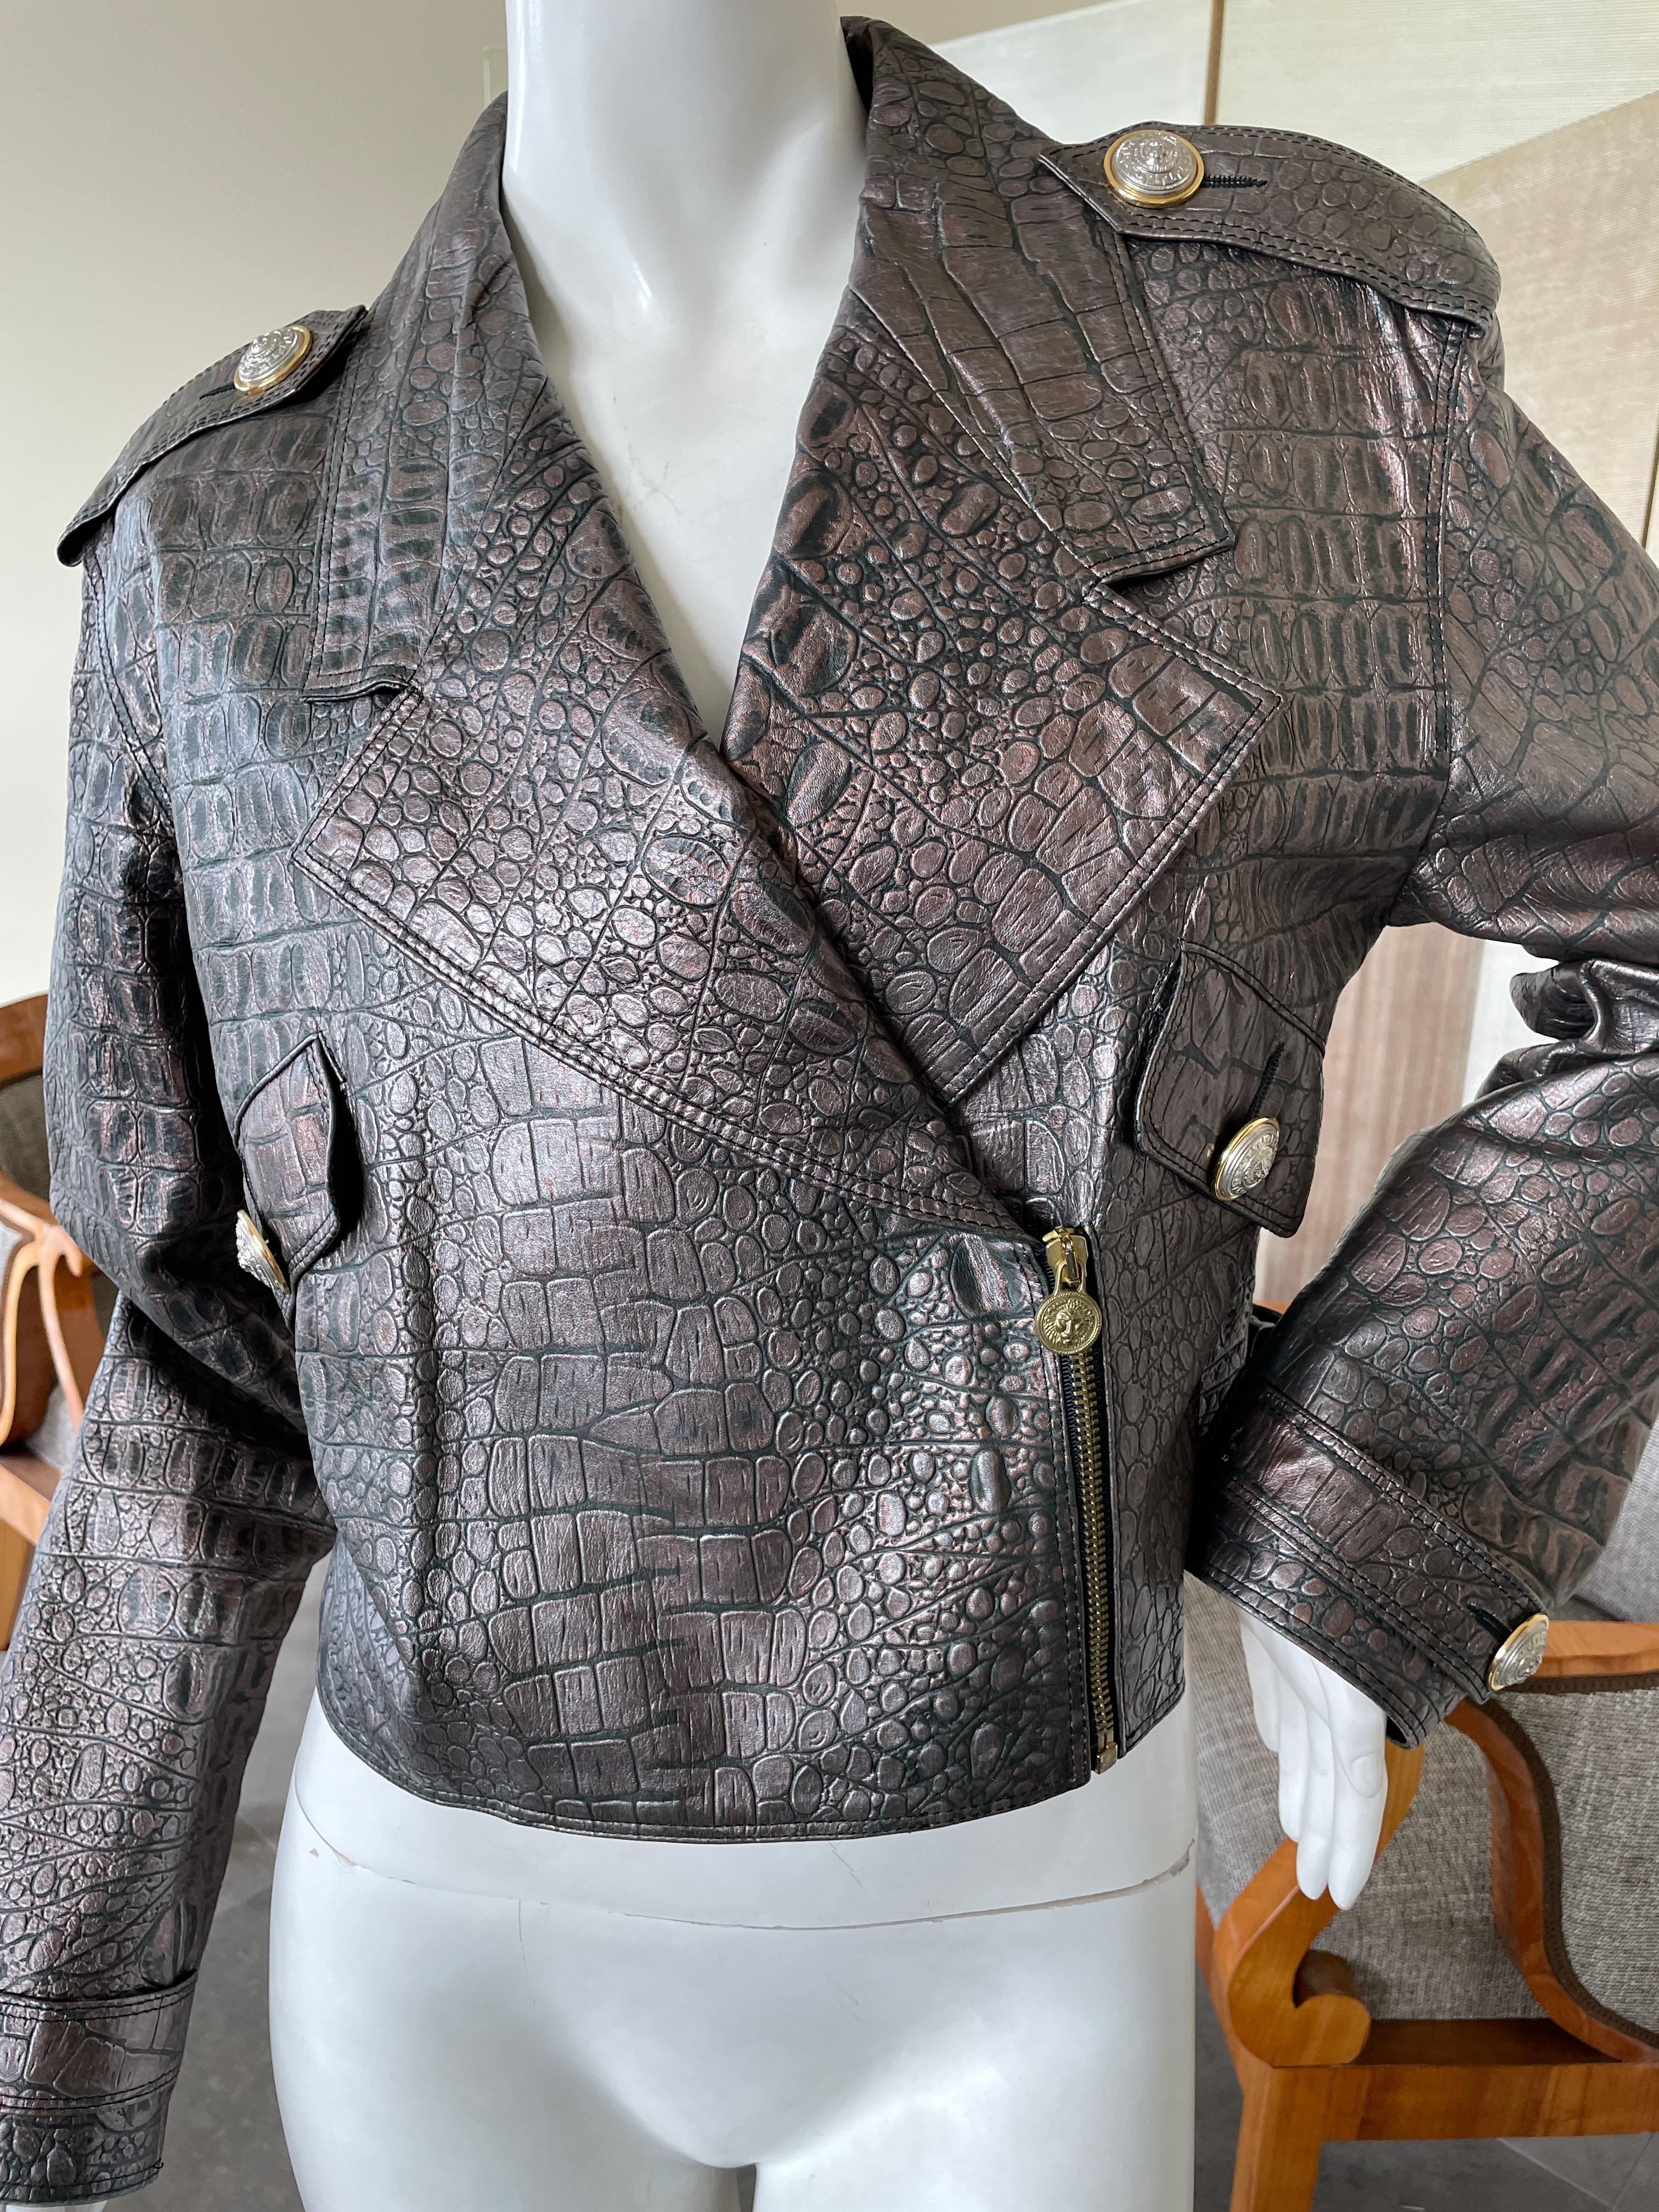 Gianni Versace VERSUS 1990 Gunmetal Gray Alligator Embossed Leather Moto Jacket 
Size 46
Bust 38